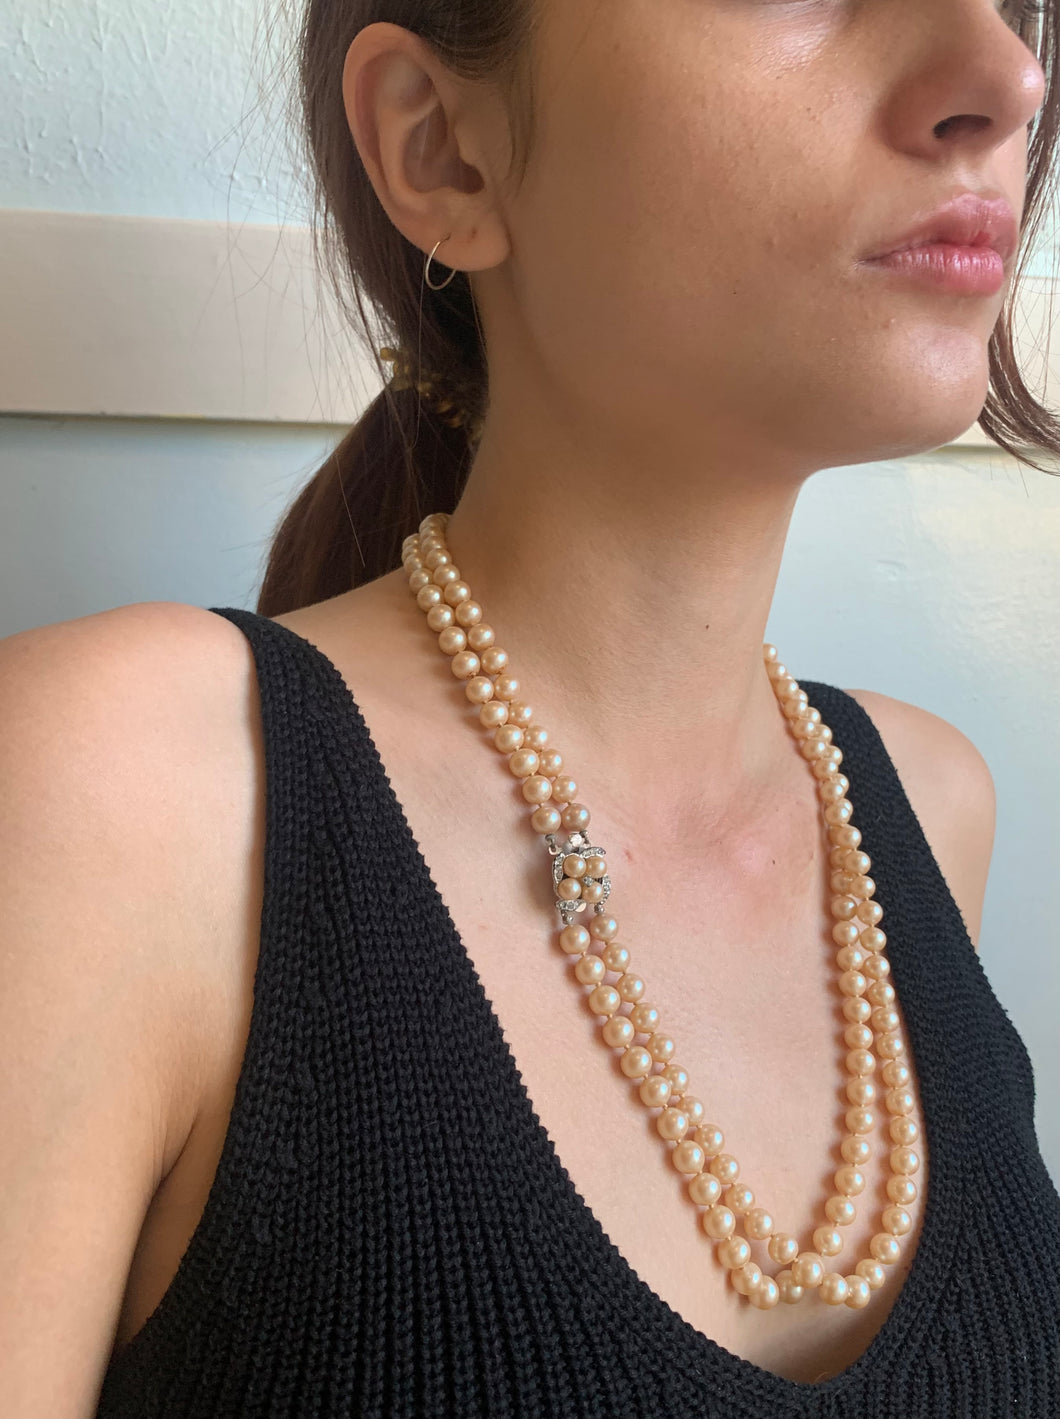 Stunning 2 strand cream pearls